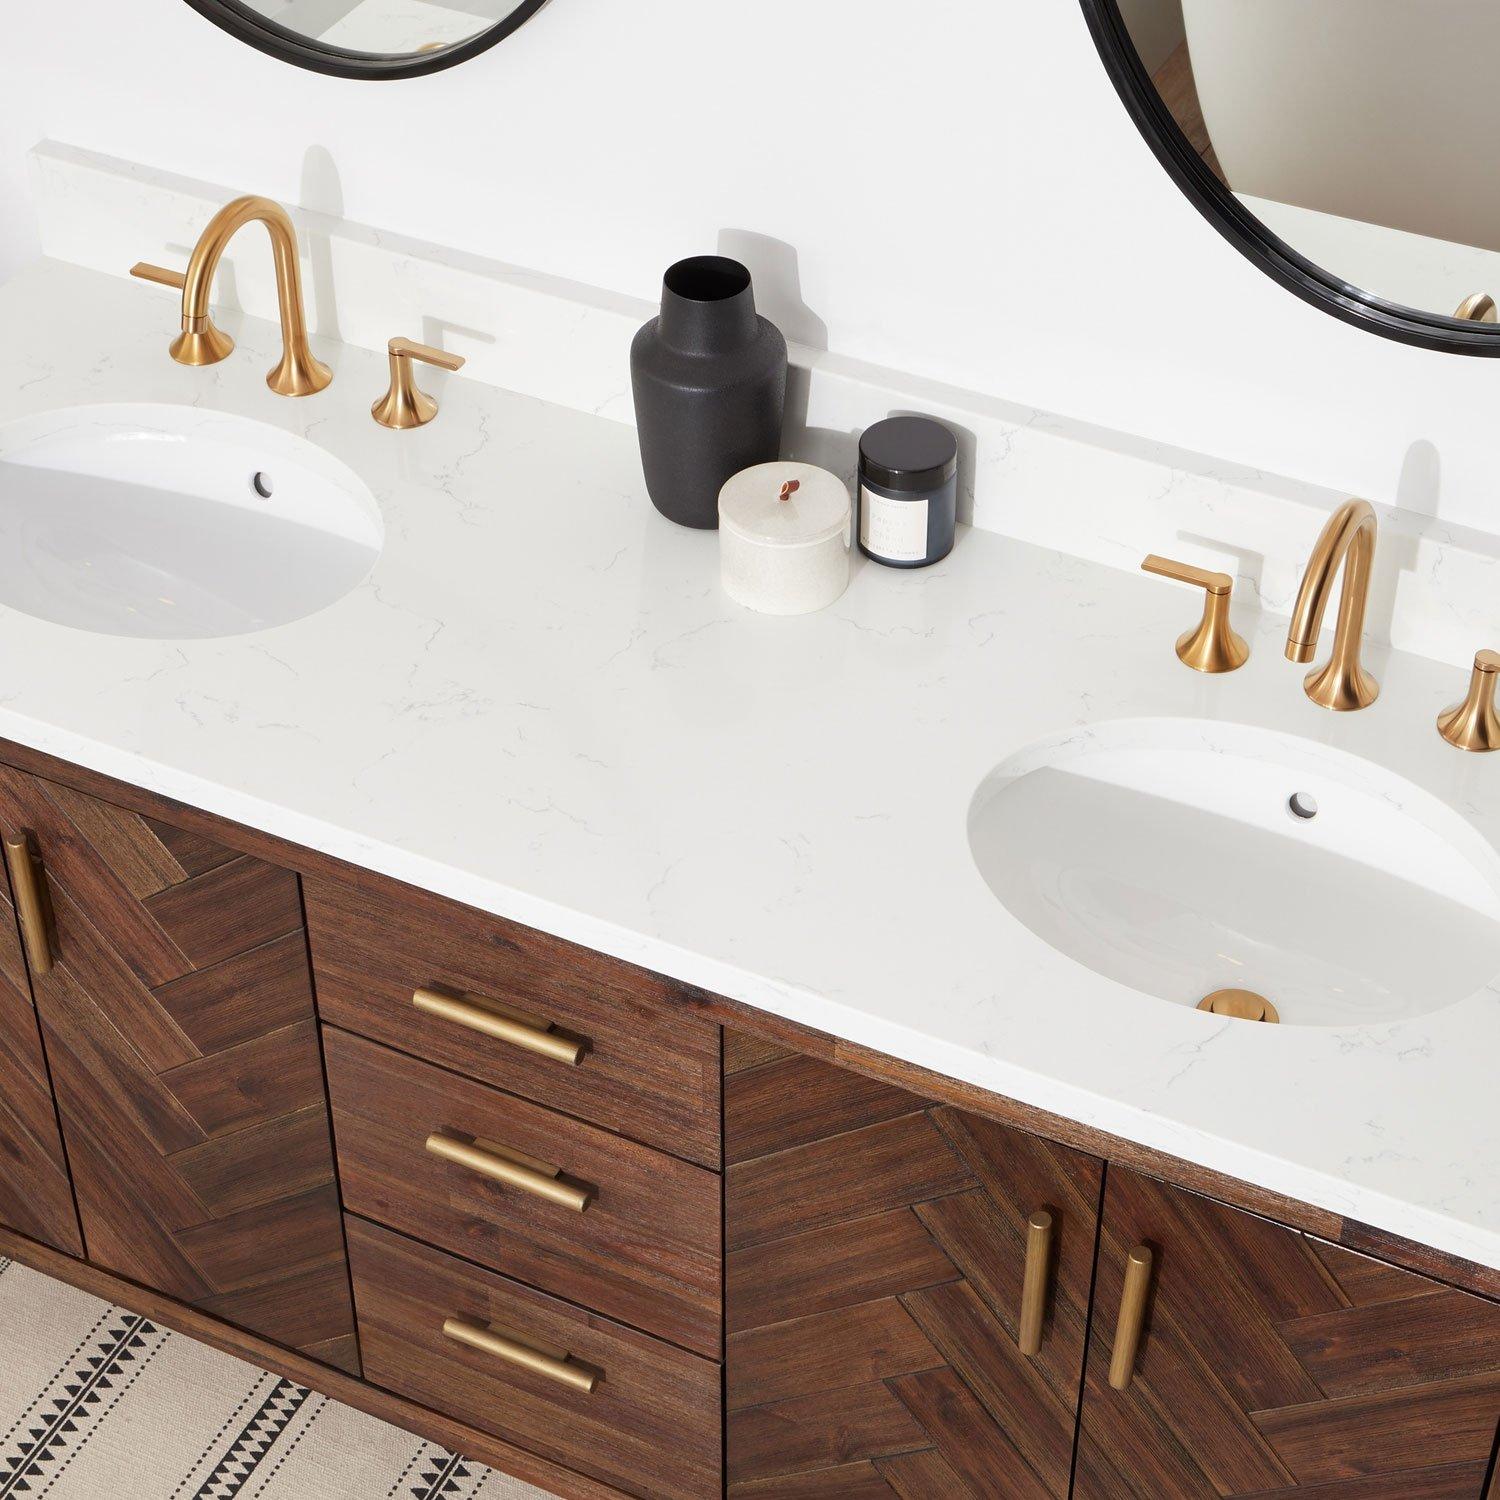 Double bowl bathroom vanity top with undermount sinks.